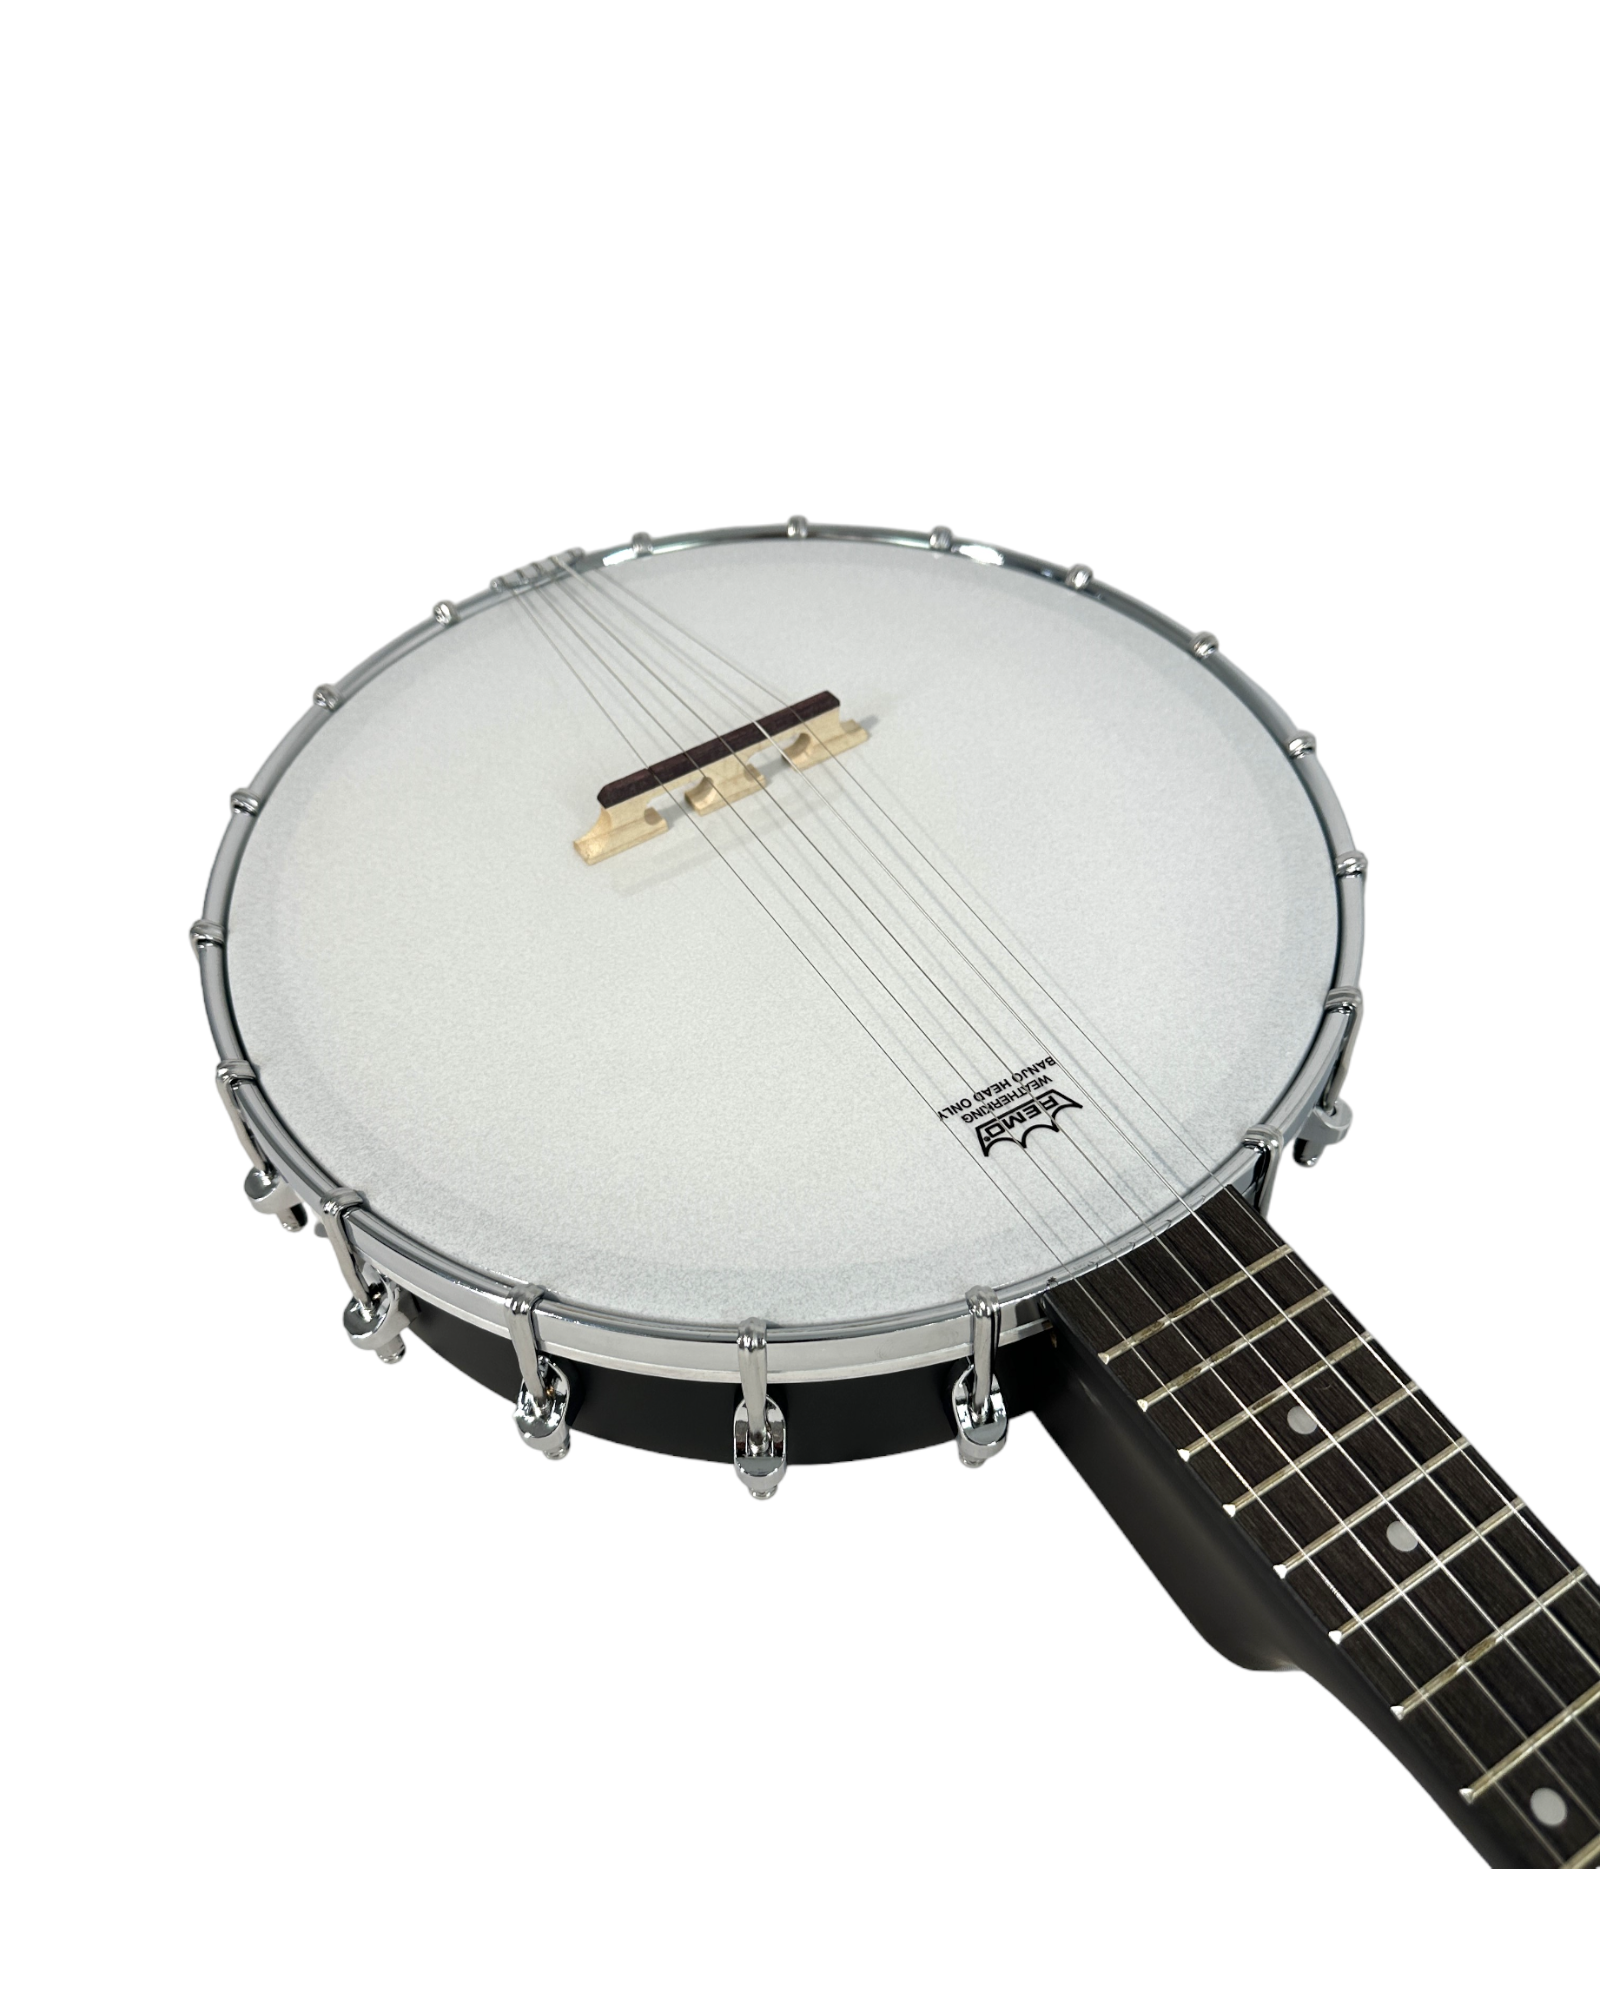 Caraya 5-String Open-Back Traveller Banjo - Black BJ30